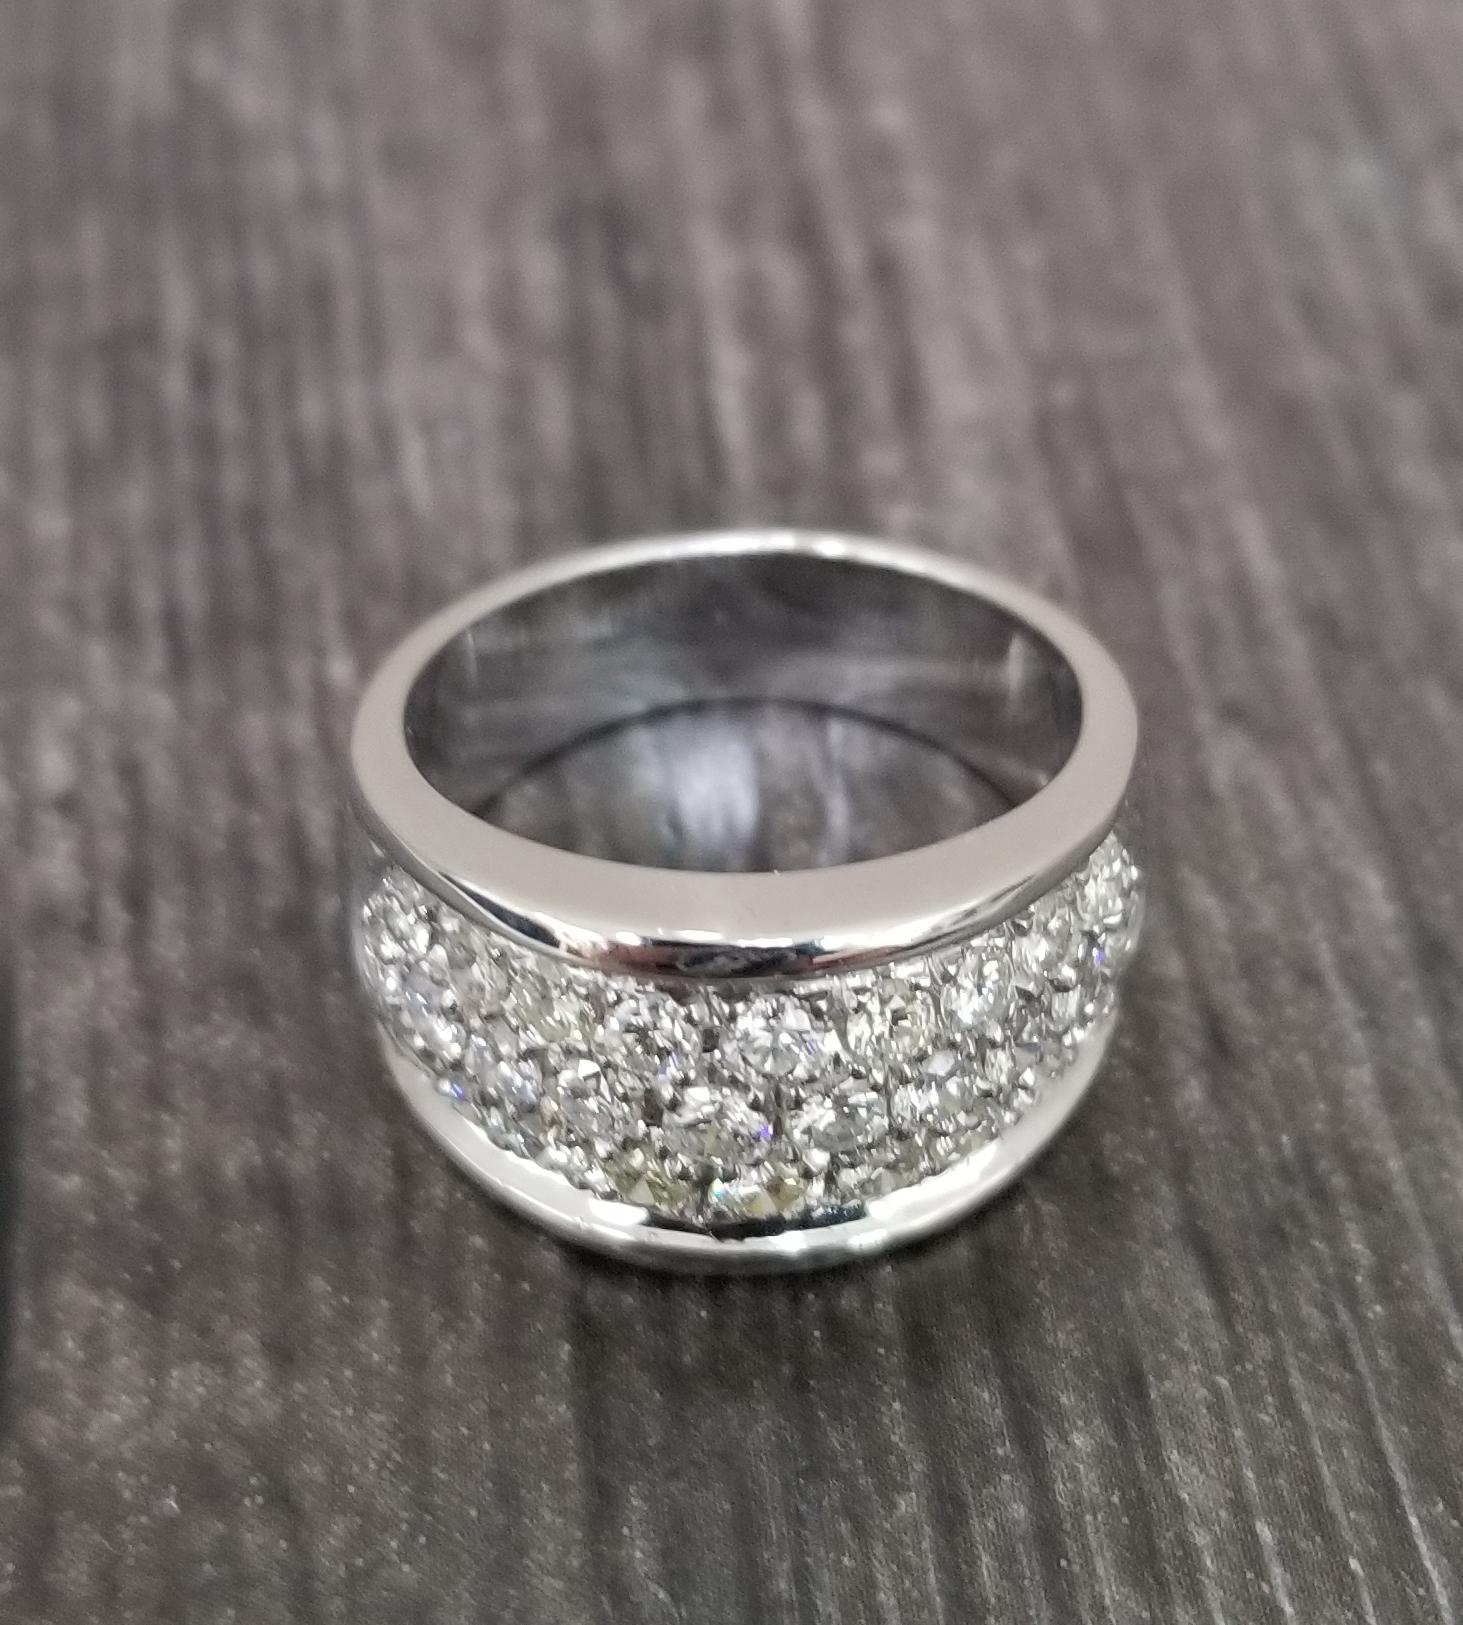 14k white gold pave diamond wedding ring, containing 28 round full cut diamonds; color 